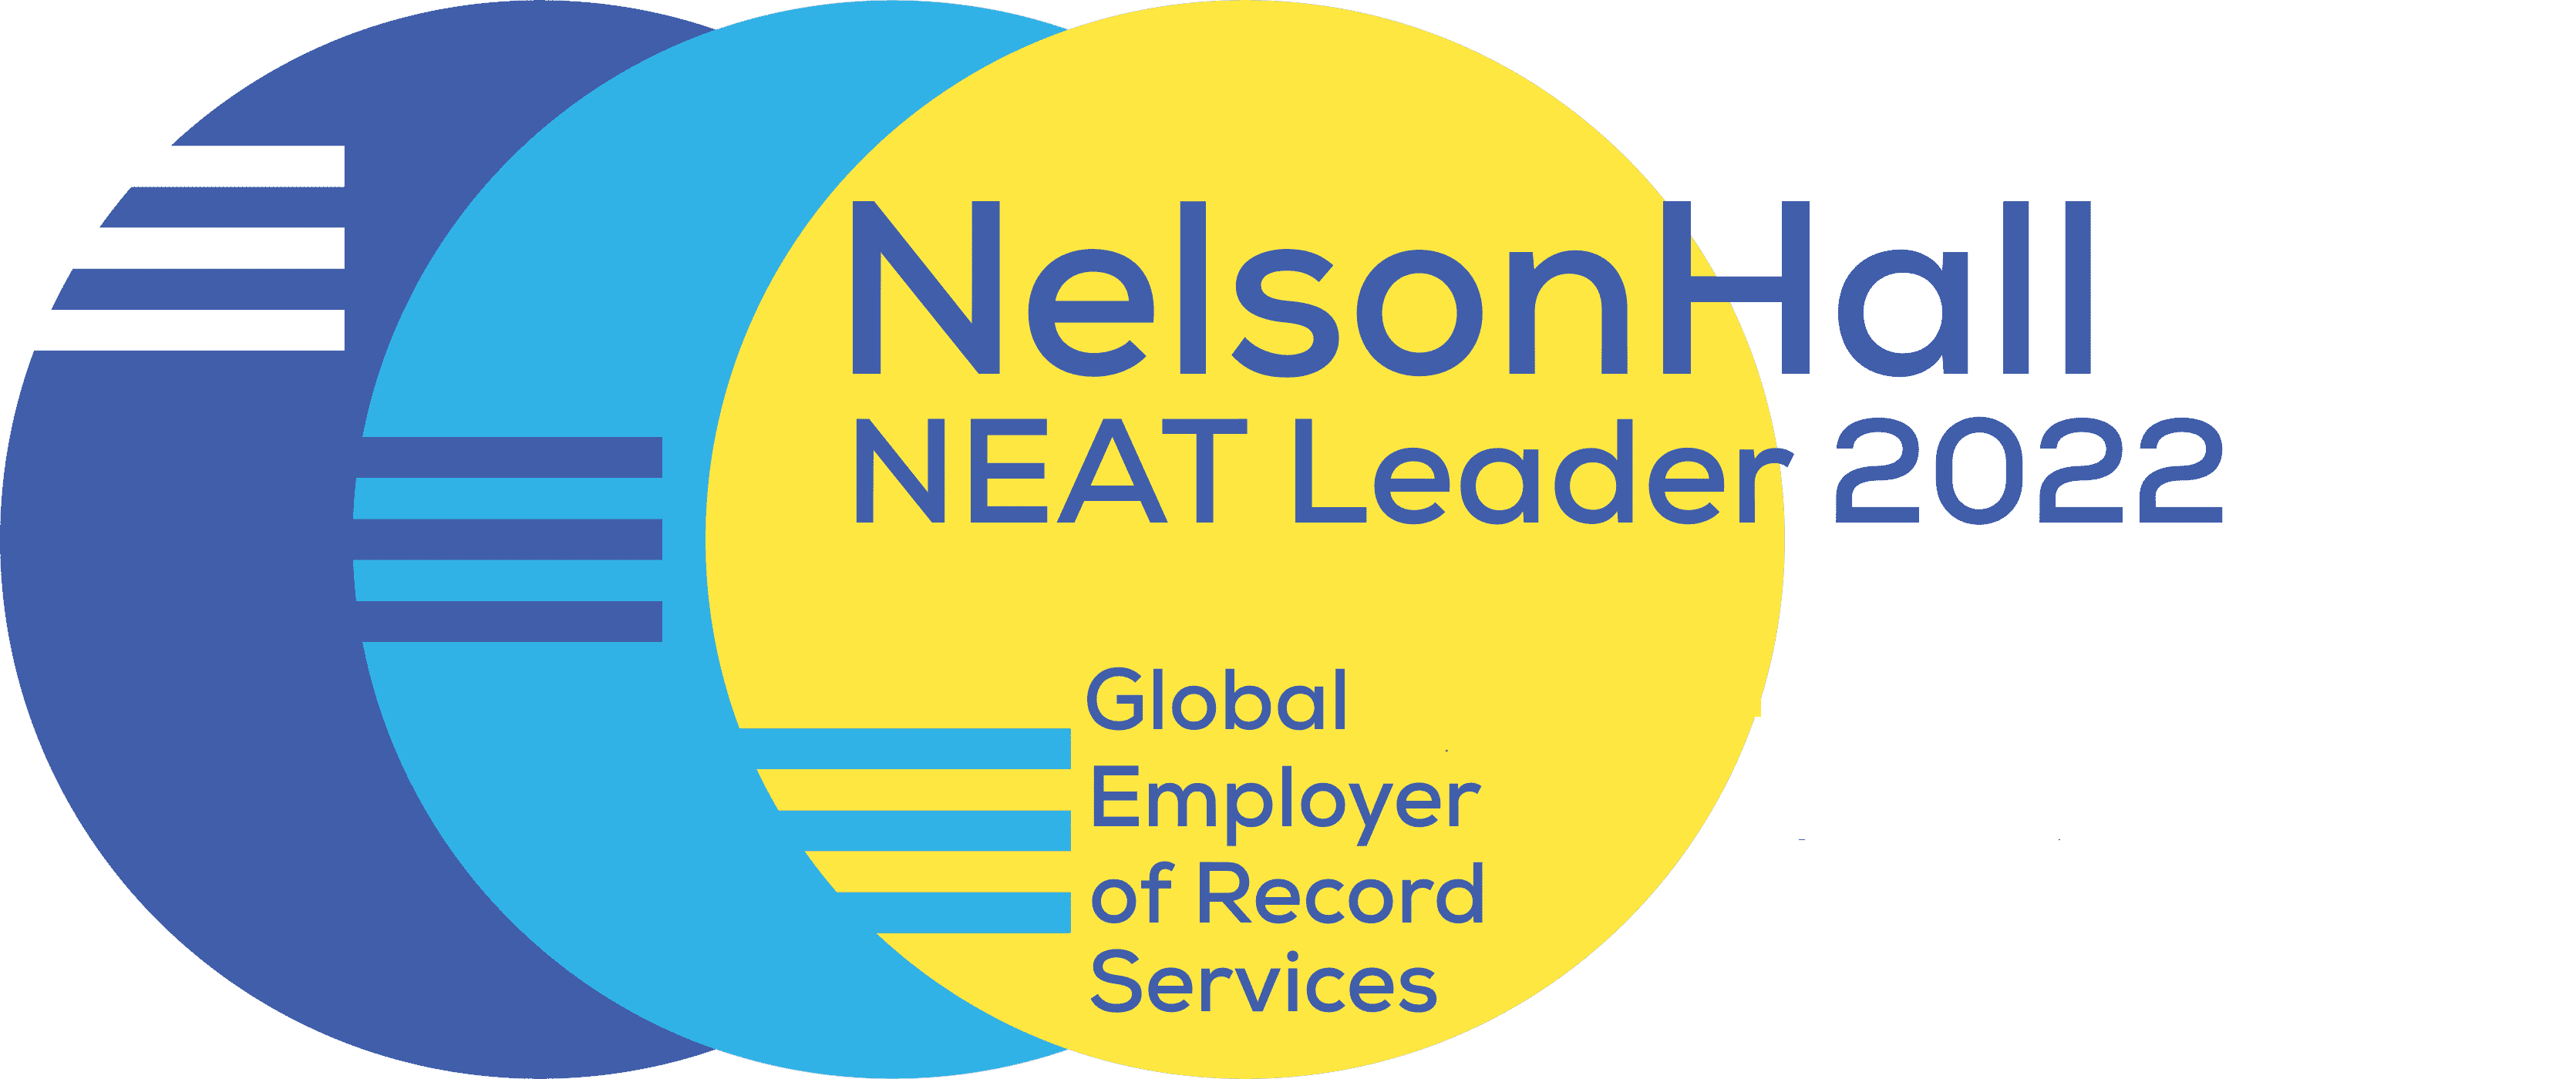 NelsonHall - 轉型洞察力